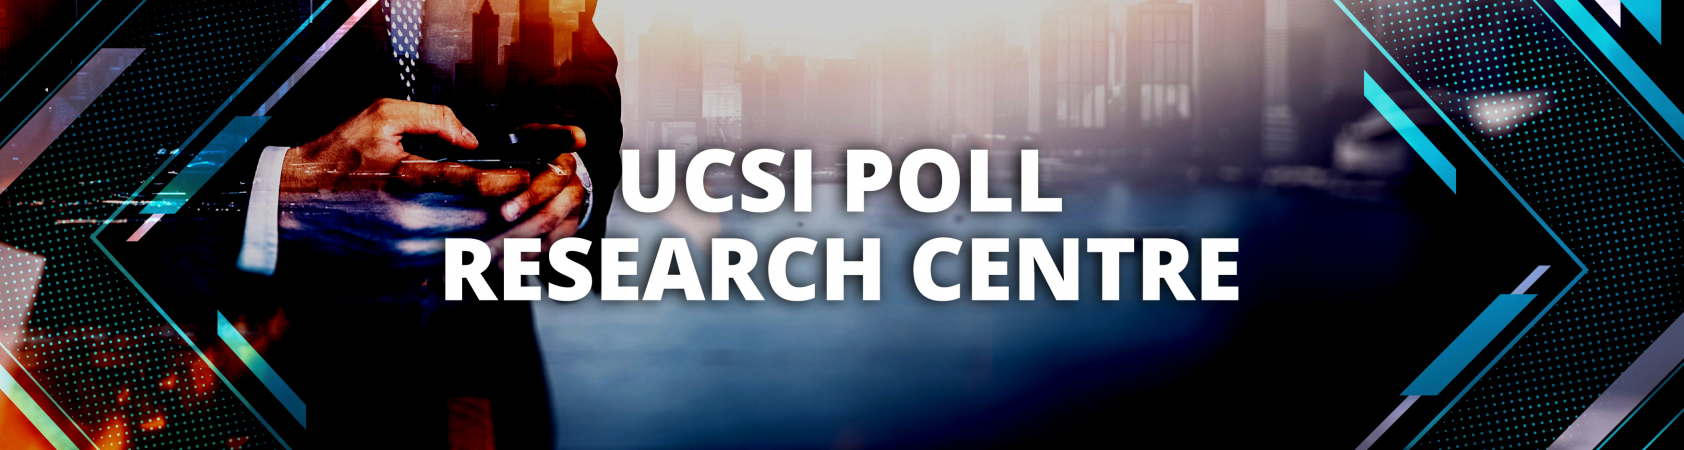 UCSI Poll Research Centre